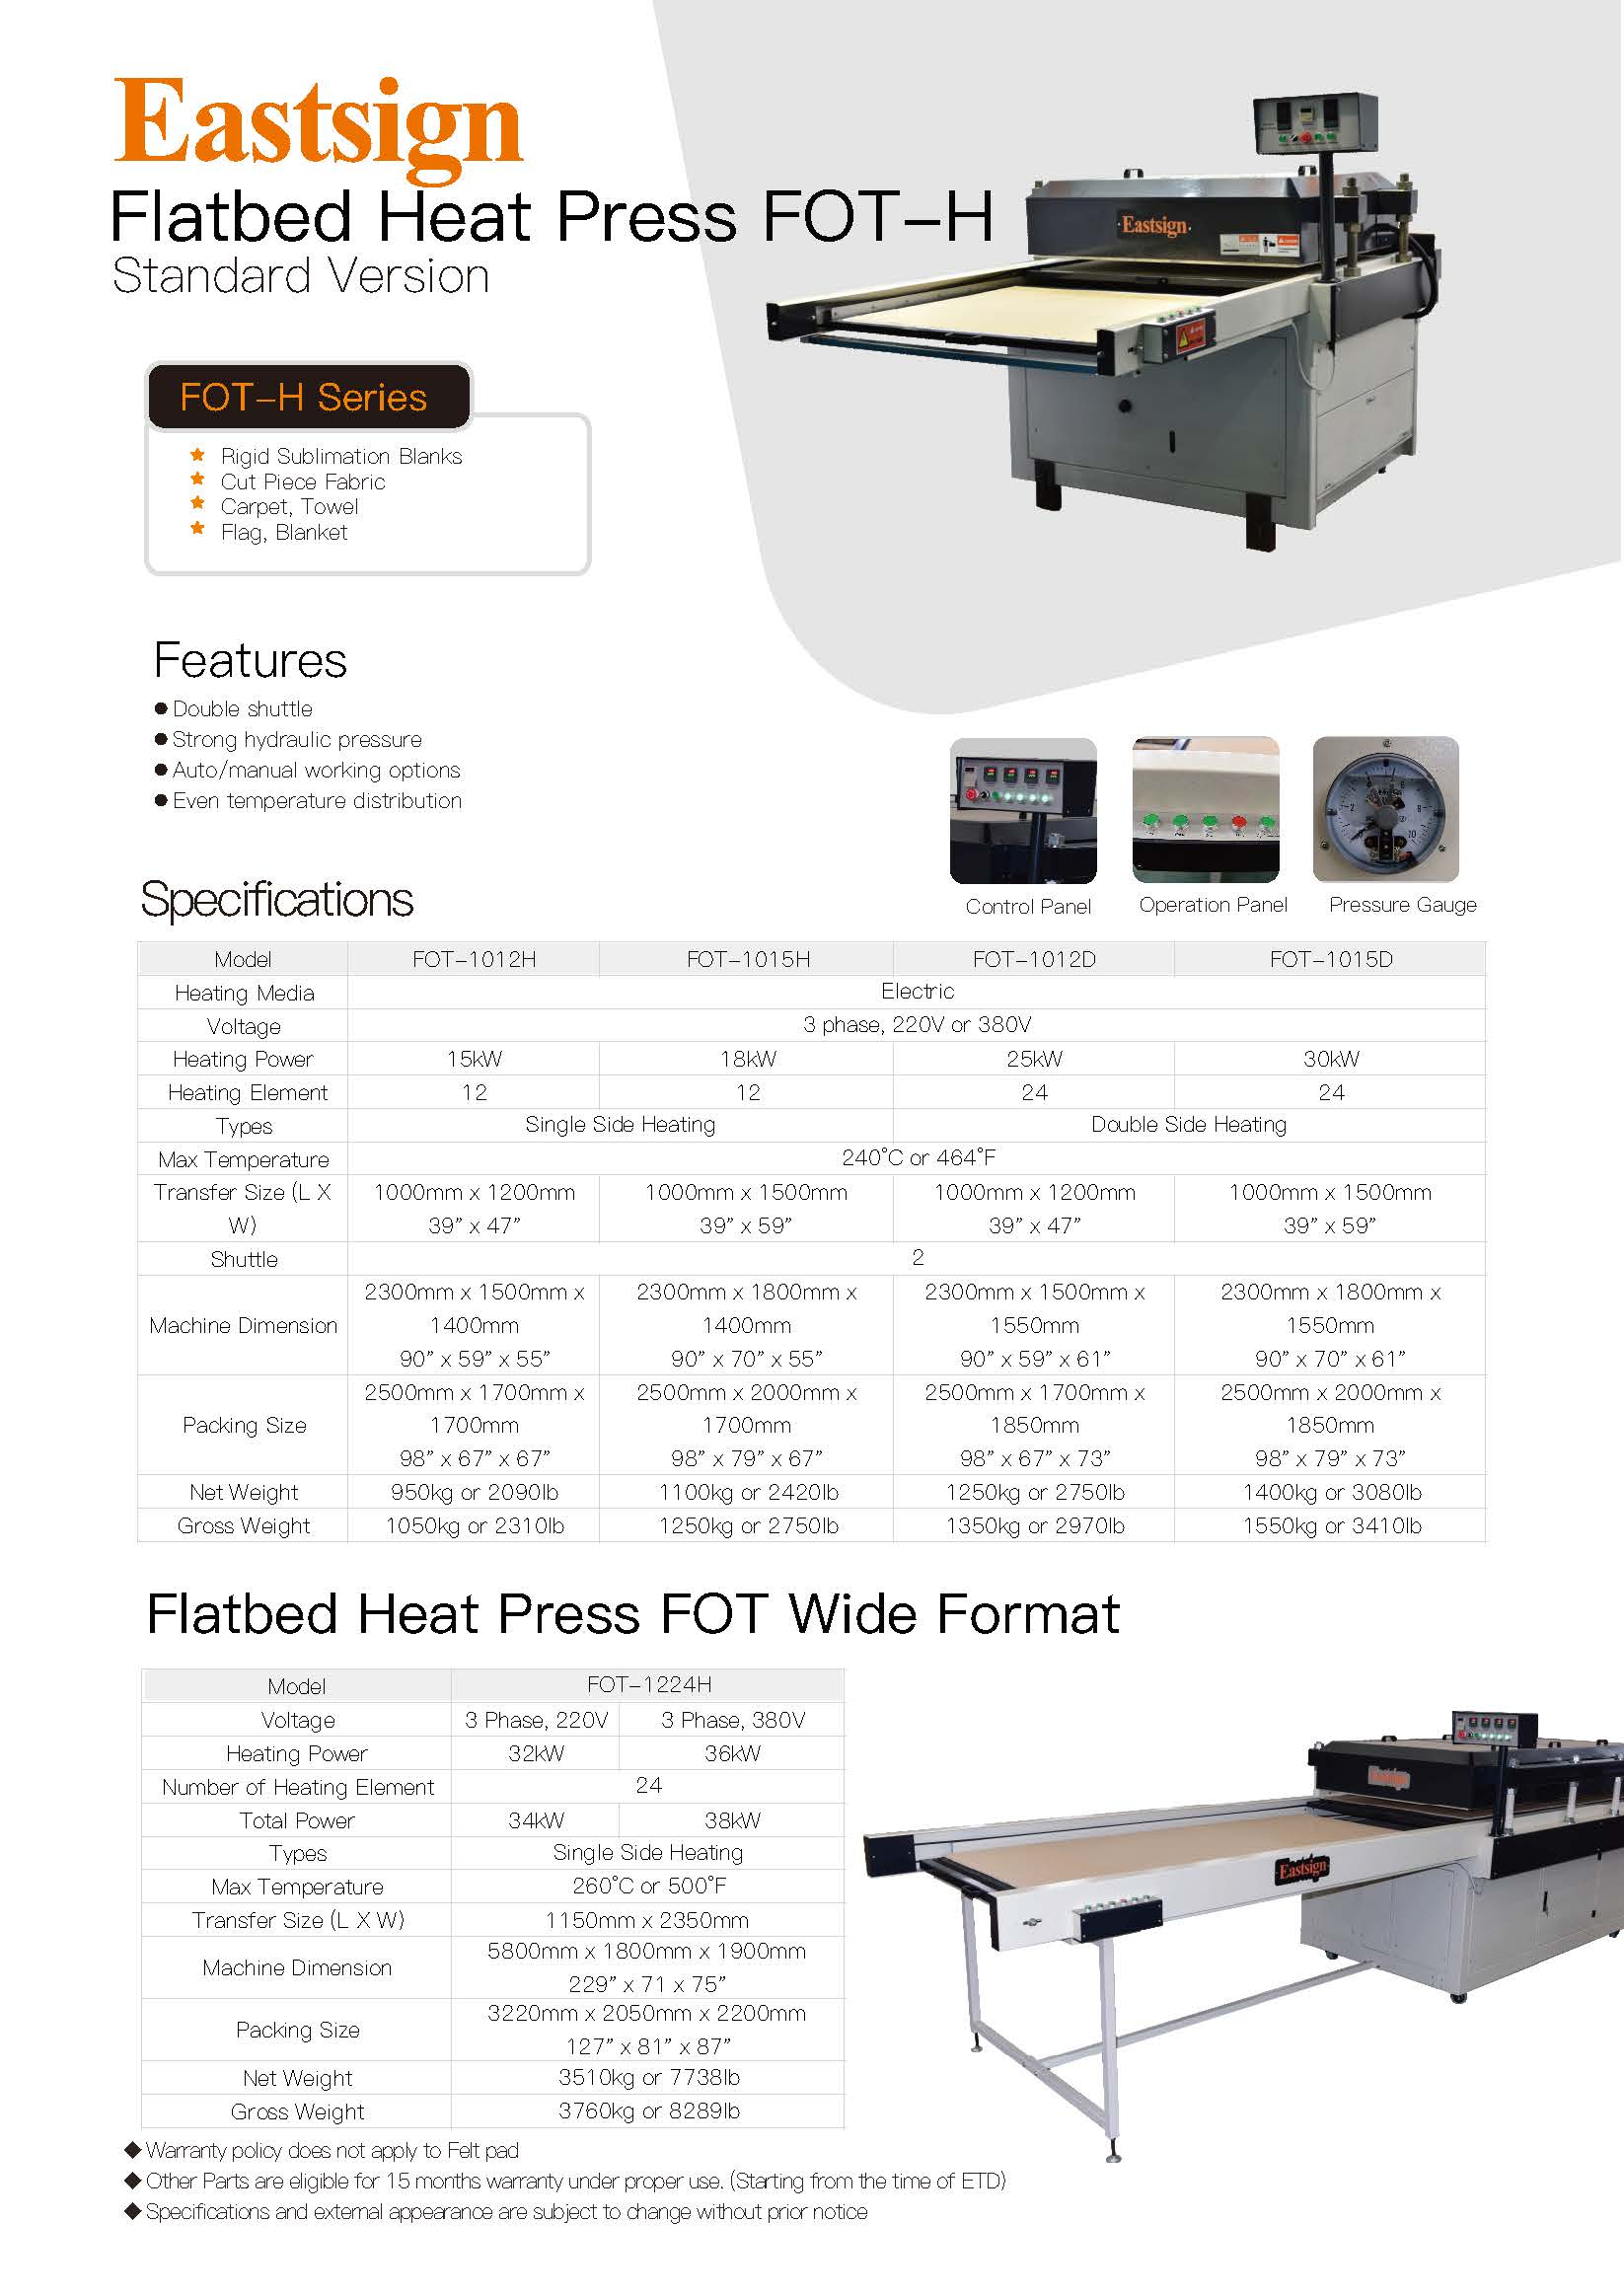  Flatbed Heat Press - FOT-H